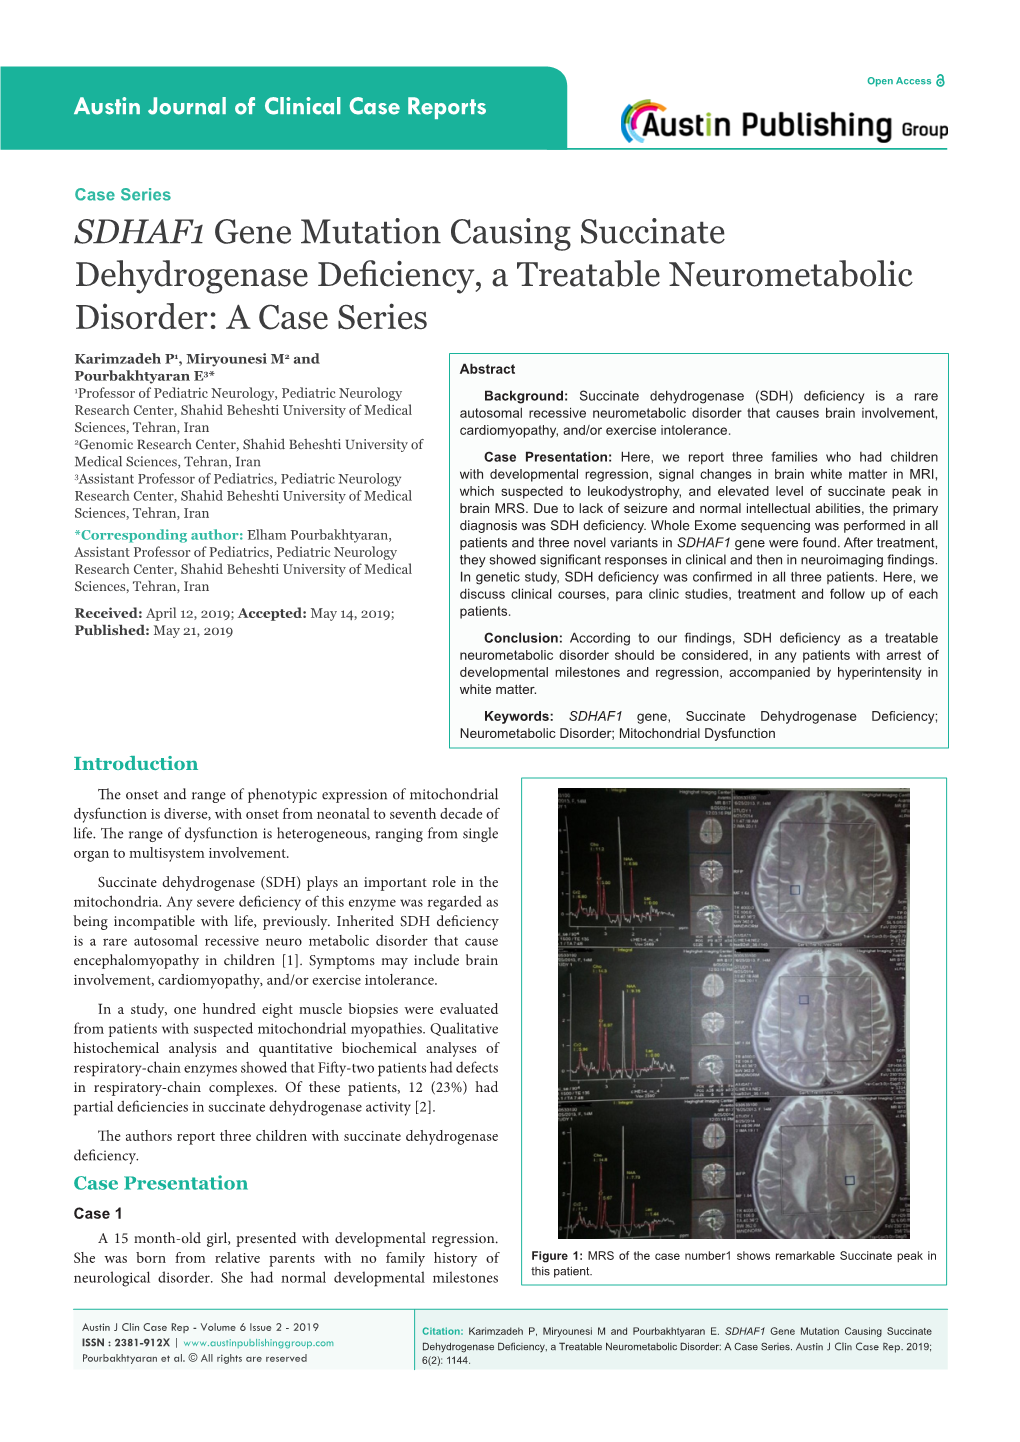 SDHAF1 Gene Mutation Causing Succinate Dehydrogenase Deficiency, a Treatable Neurometabolic Disorder: a Case Series